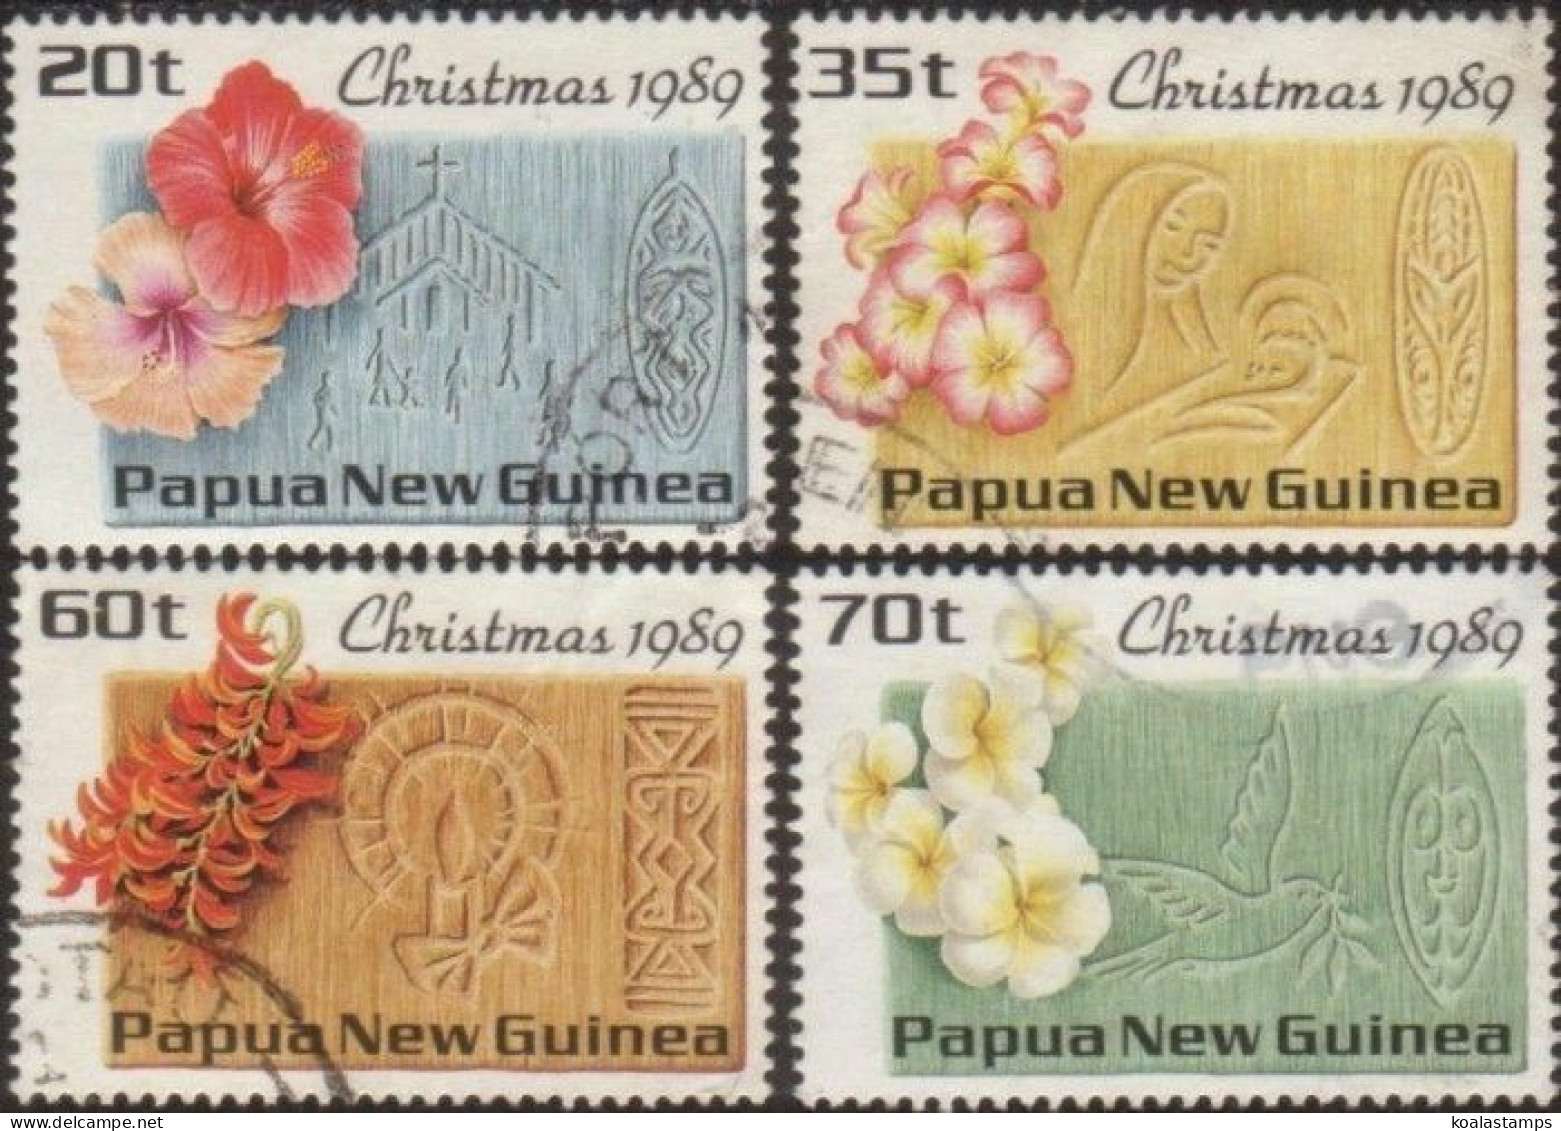 Papua New Guinea 1989 SG607-610 Christmas Set FU - Papua New Guinea